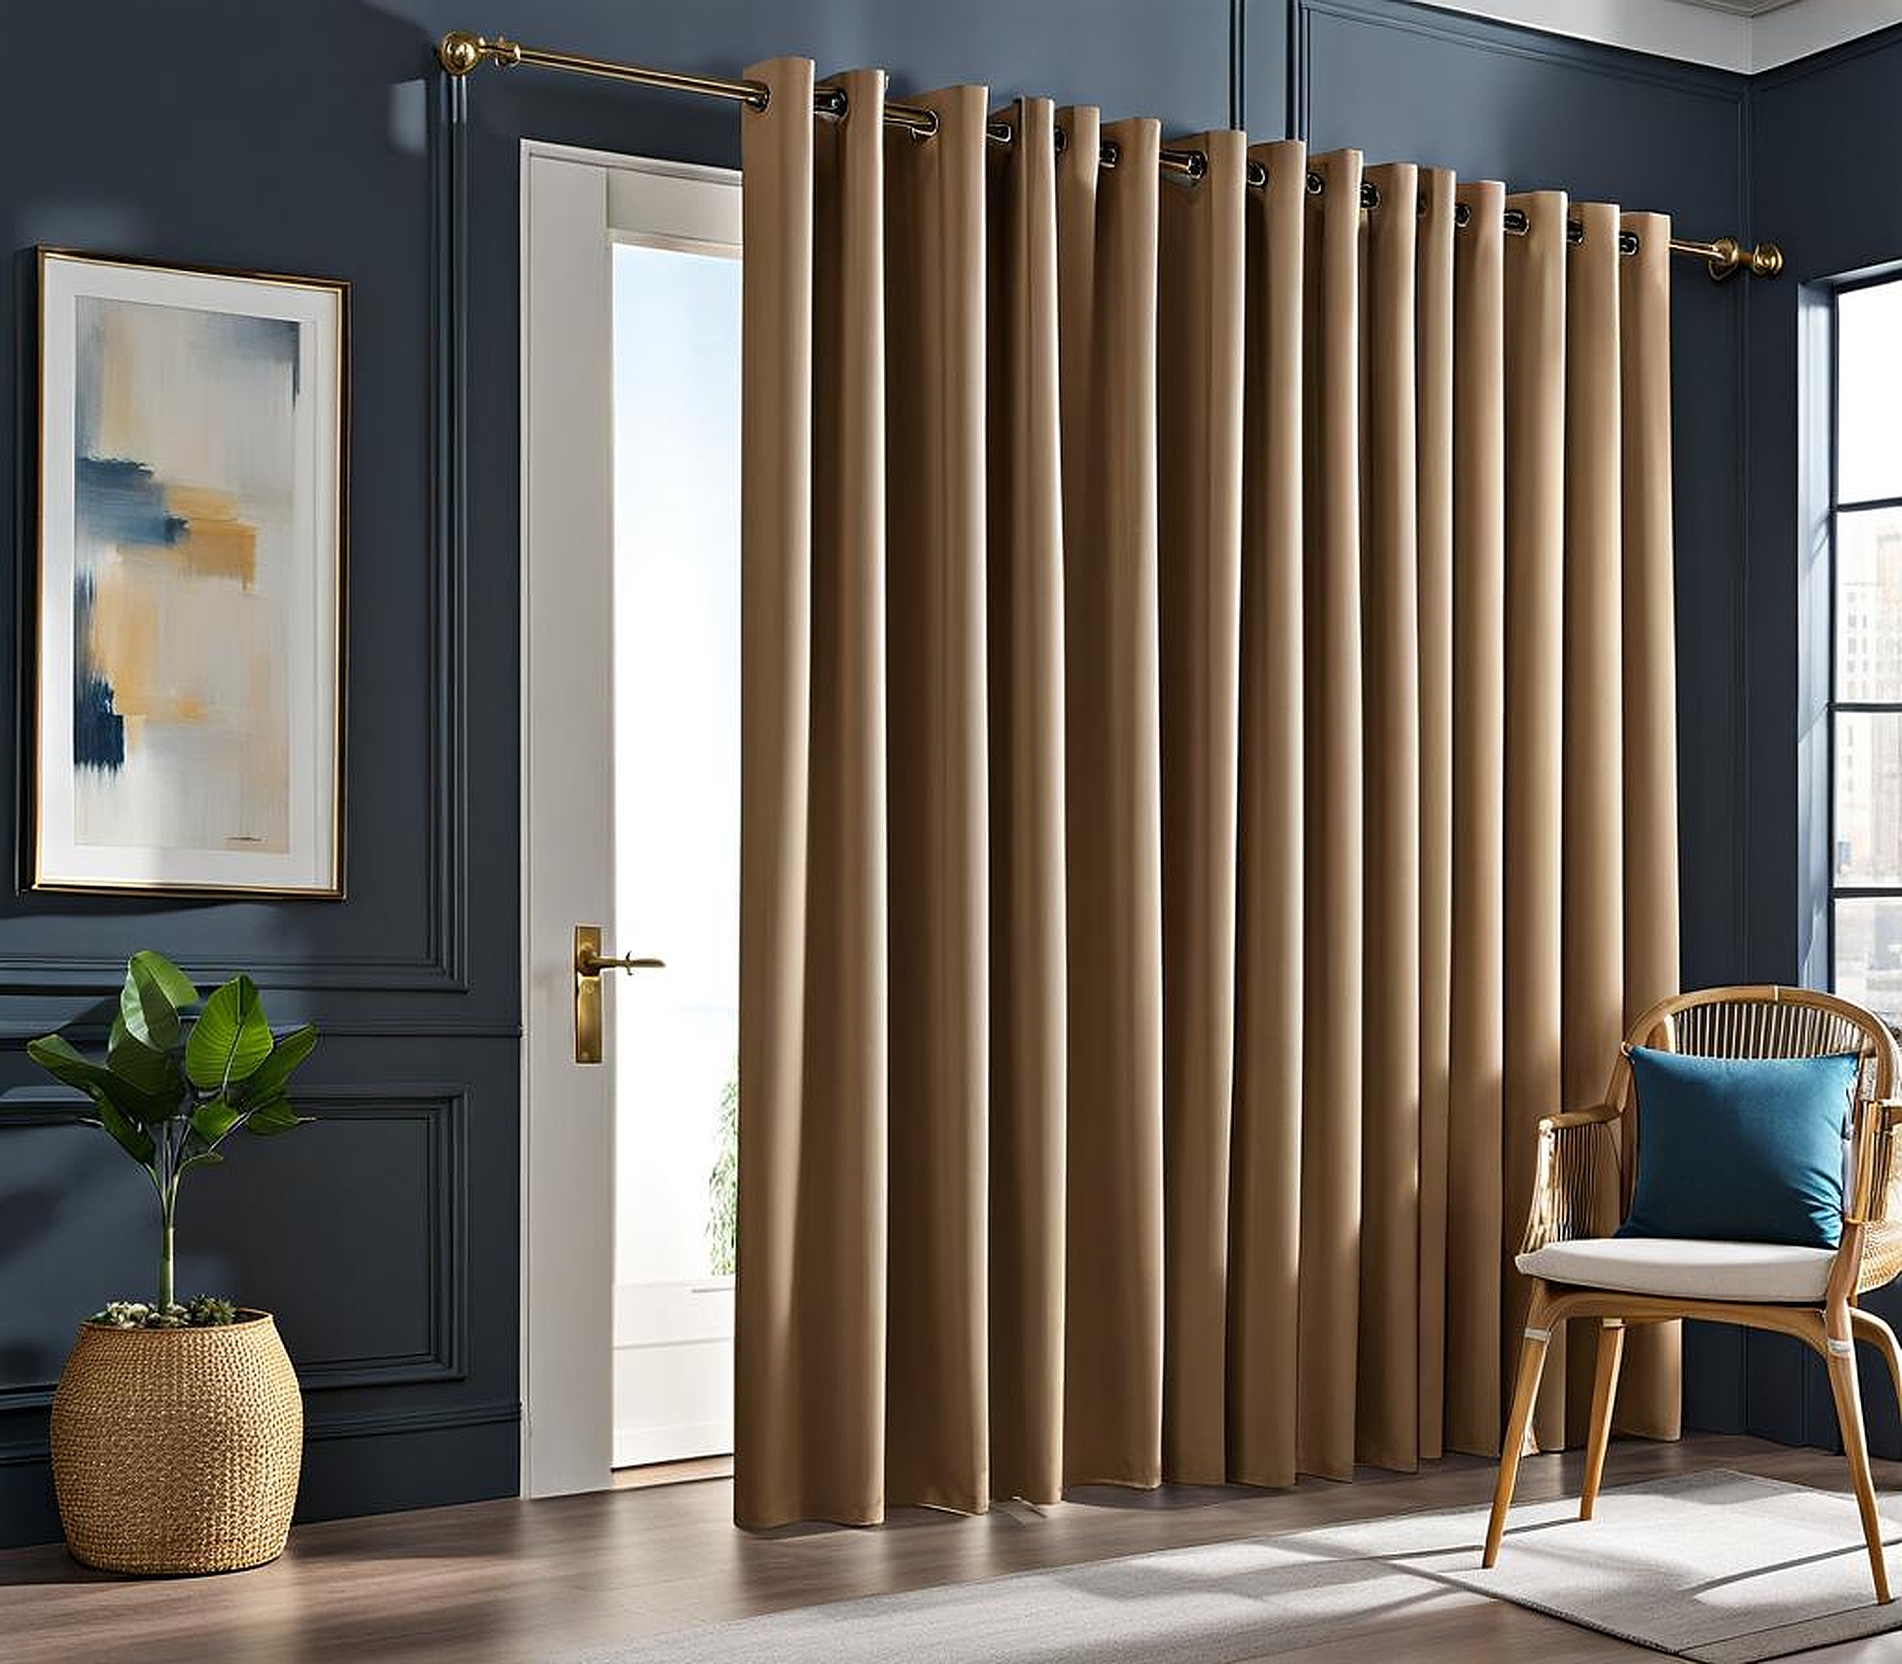 Elegant Privacy Curtain Solutions for Doorways